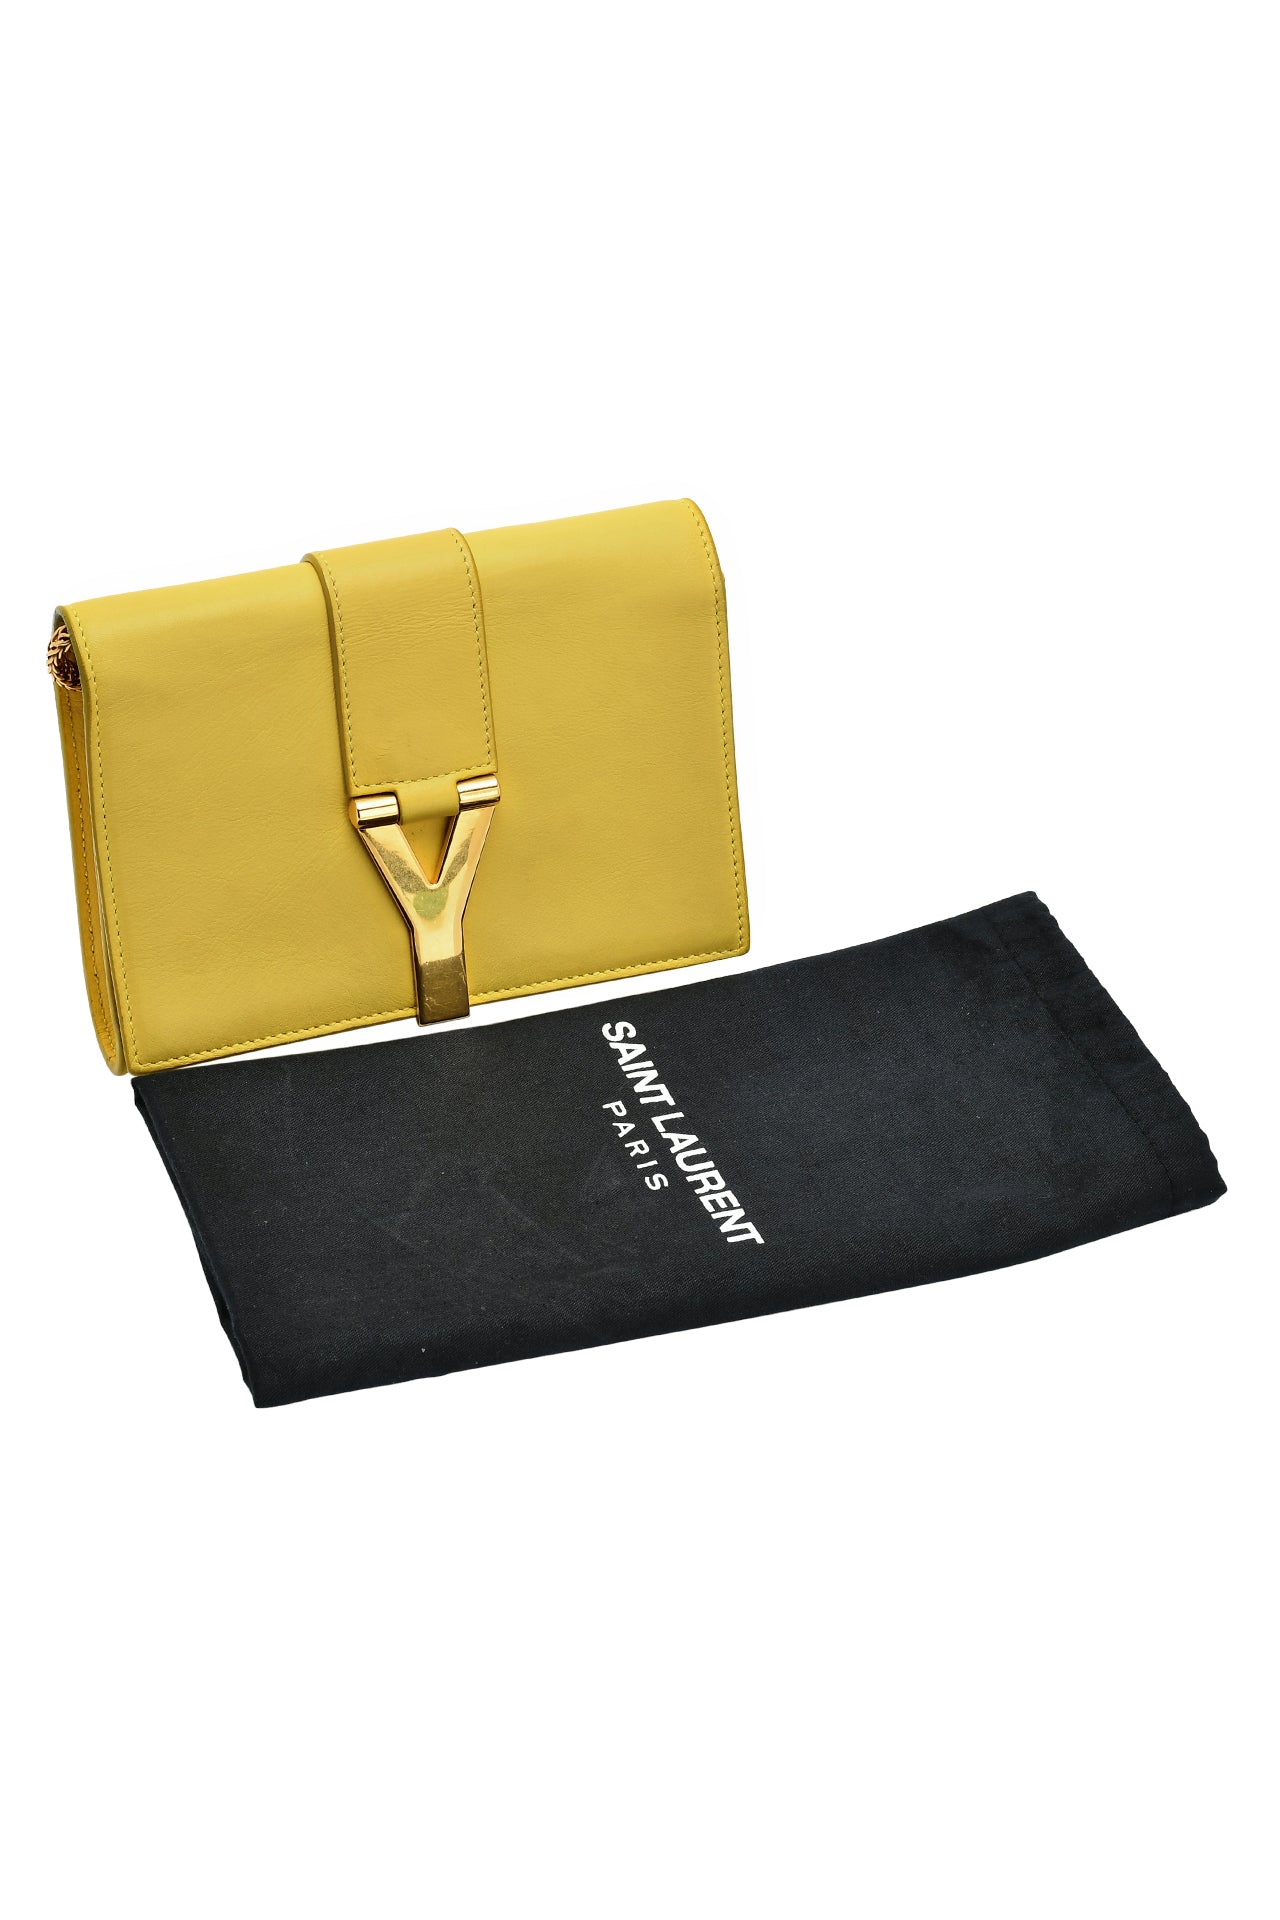 Yves Saint Laurent Yellow Calfskin Leather ChYc Mini Crossbody Bag